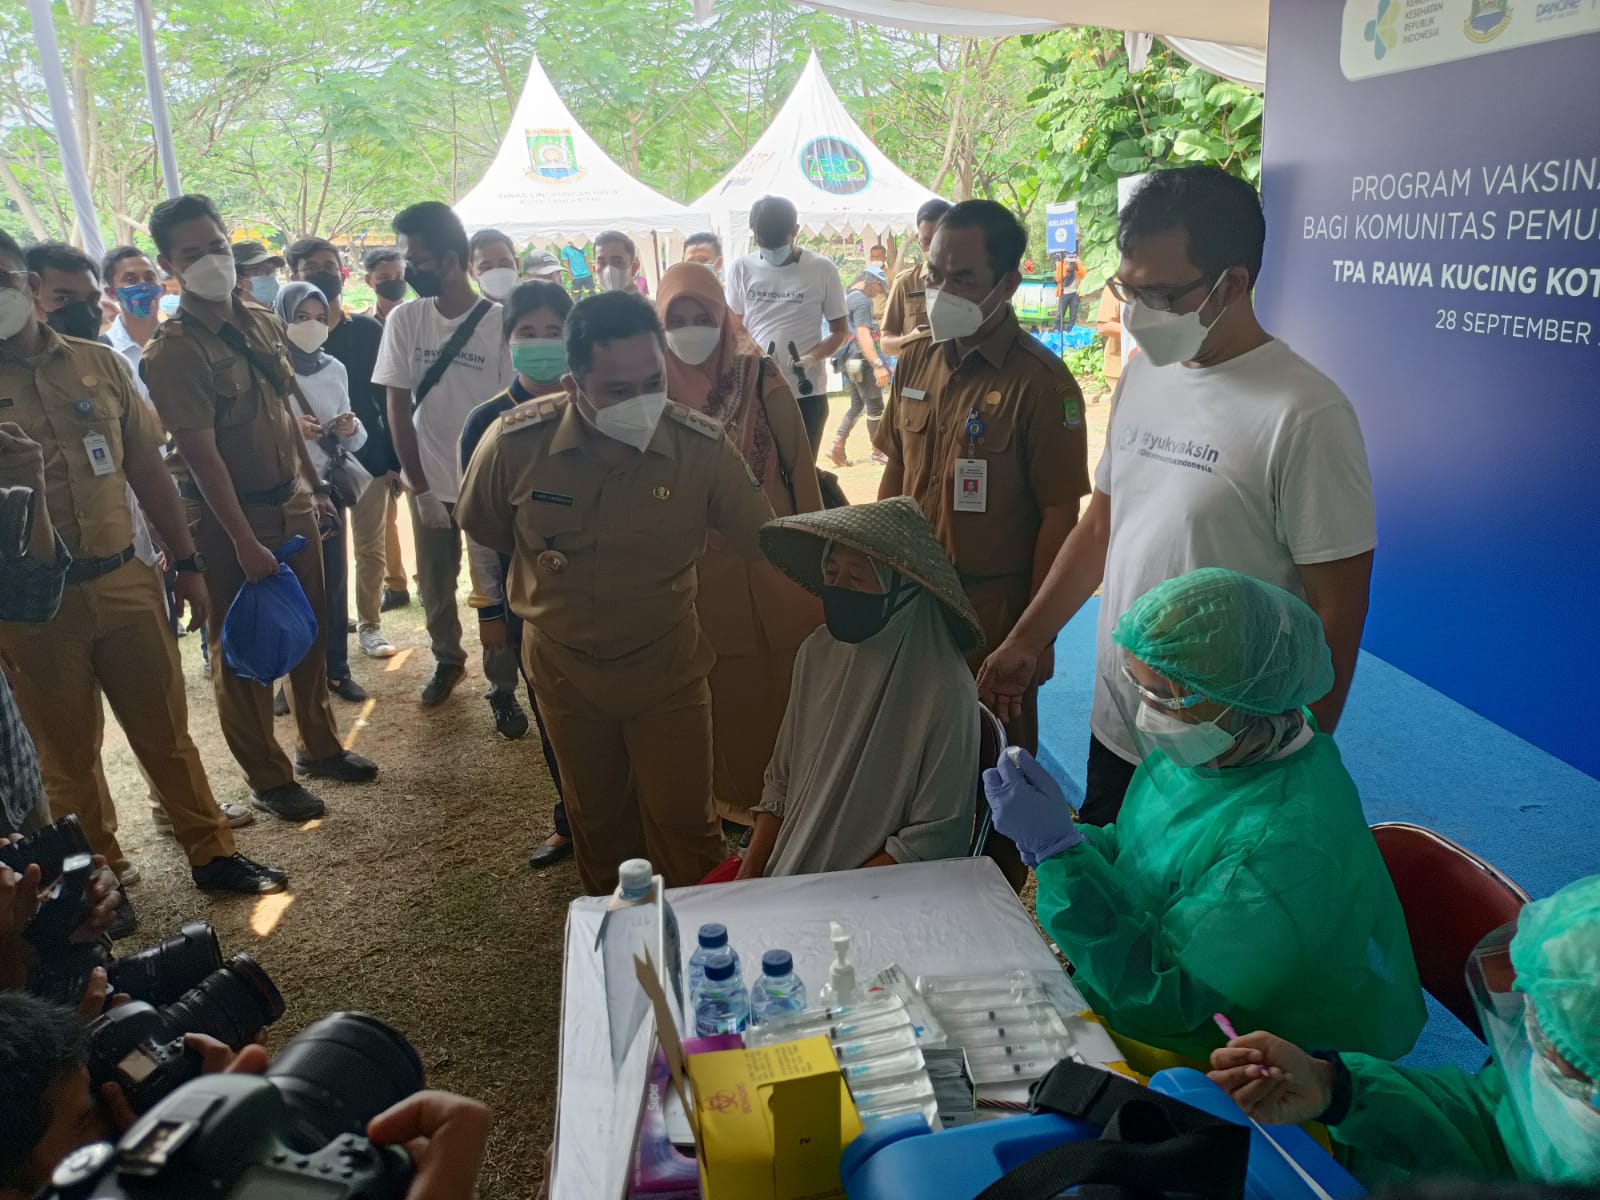 Kegiatan vaksinansi guna mencegah penyebaran Covid-19 yang dihadiri langsung oleh Wali Kota Tangerang Arief R Wismansyah di Tempat Pembuangan Akhir (TPA) Rawakucing, Kecamatan Neglasari, Kota Tangerang, Selasa 28 September 2021 siang.